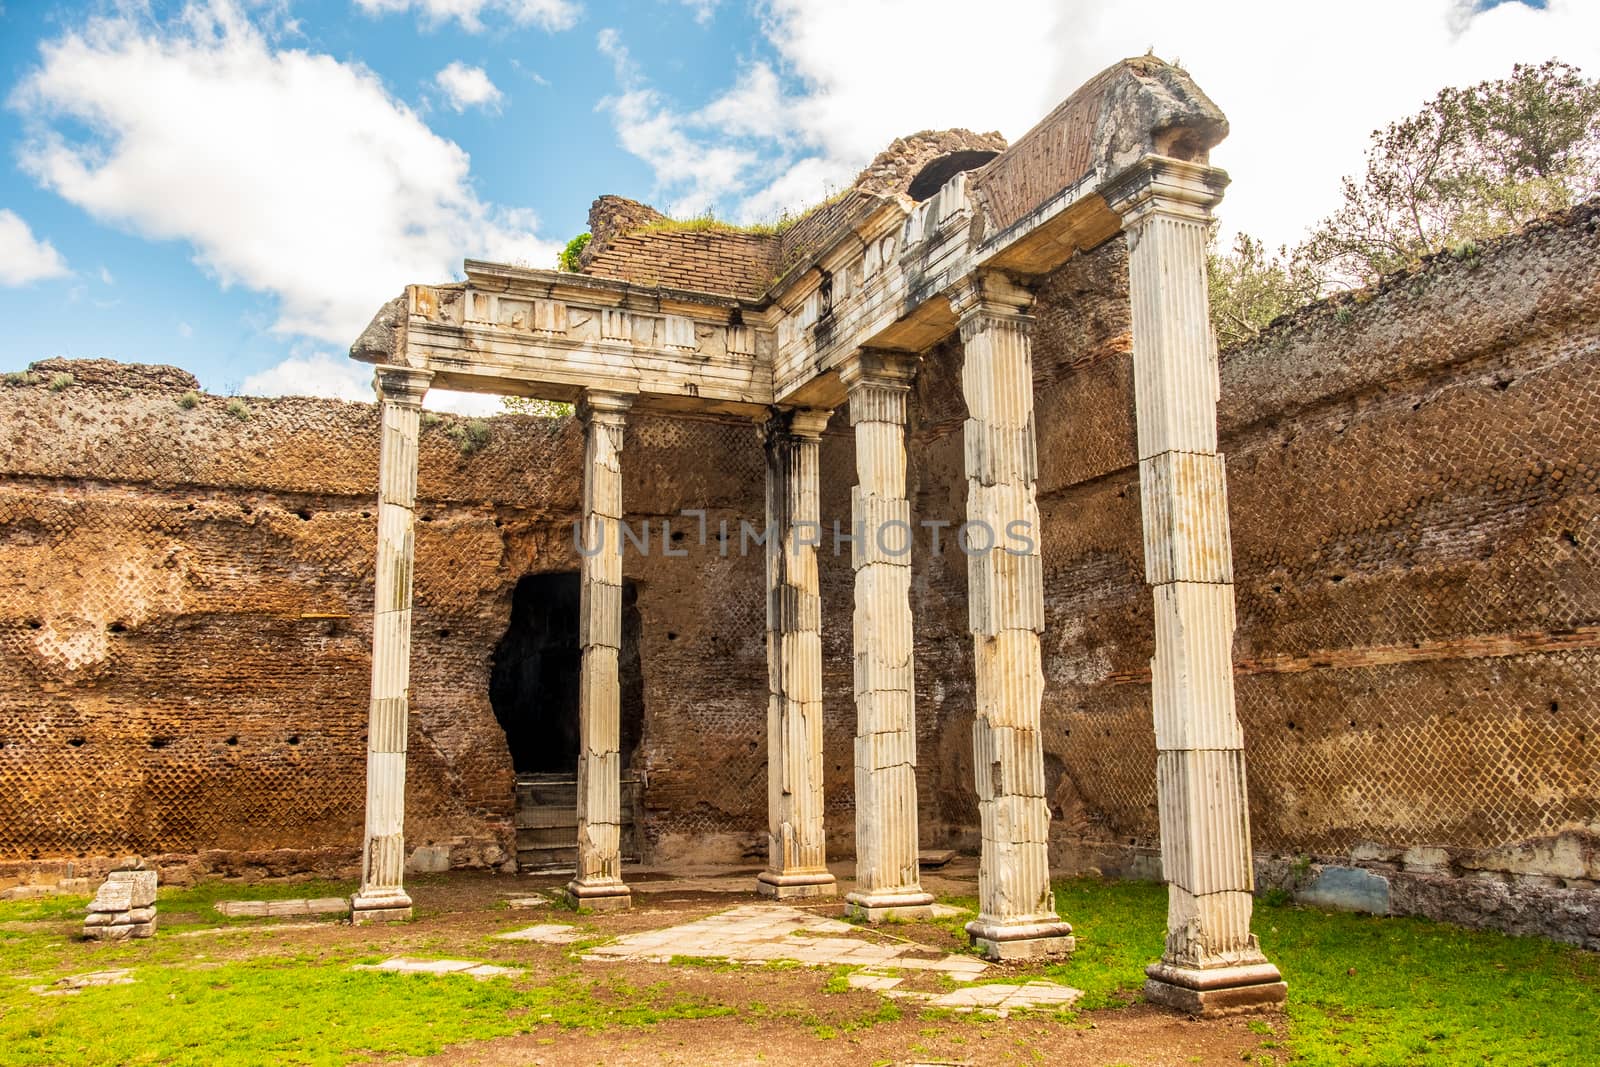 Villa Adriana roman ruins columns - Rome Tivoli - Italy by LucaLorenzelli